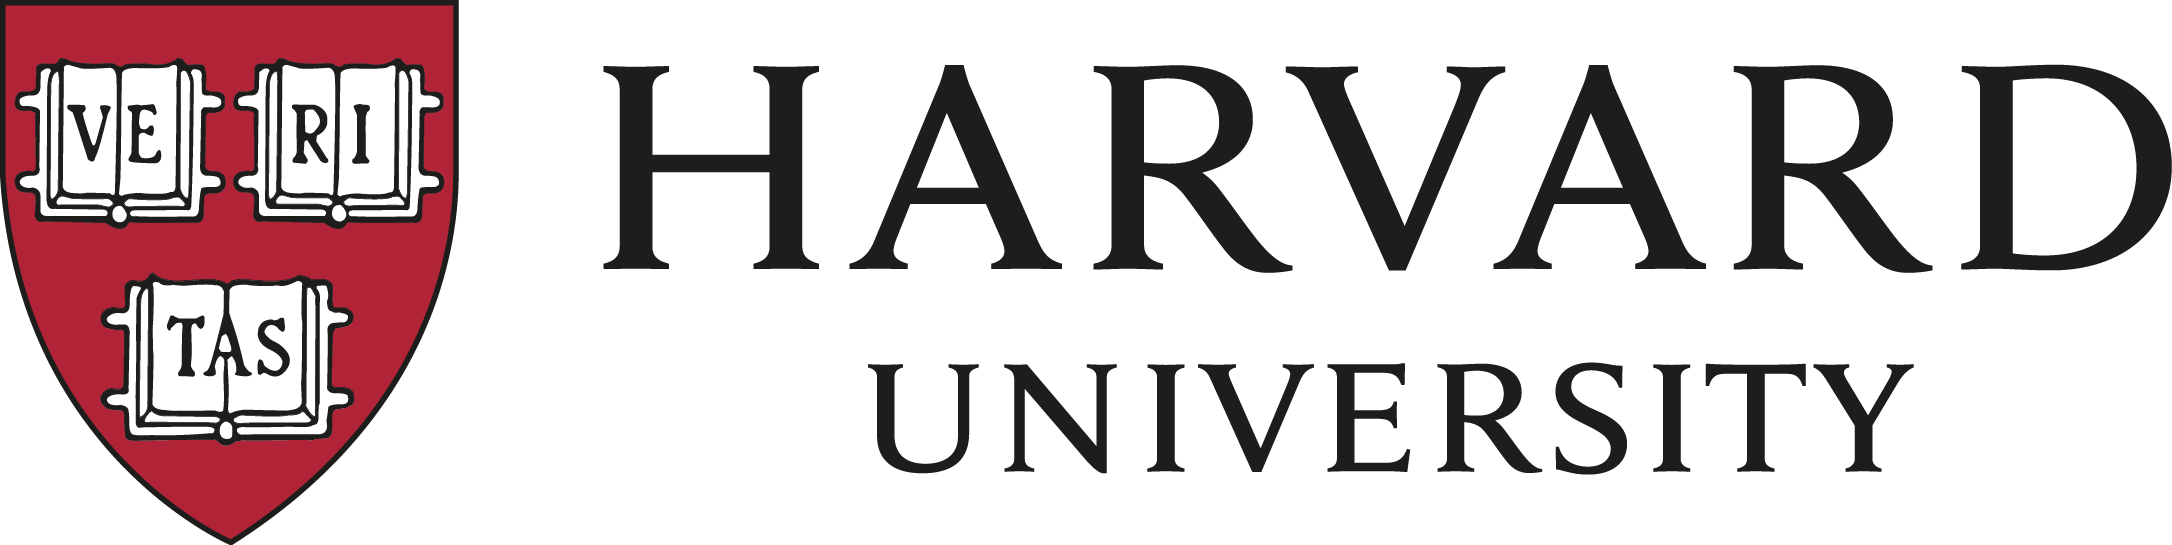 Harvard University Logo - Harvard University - Mooxye Blog